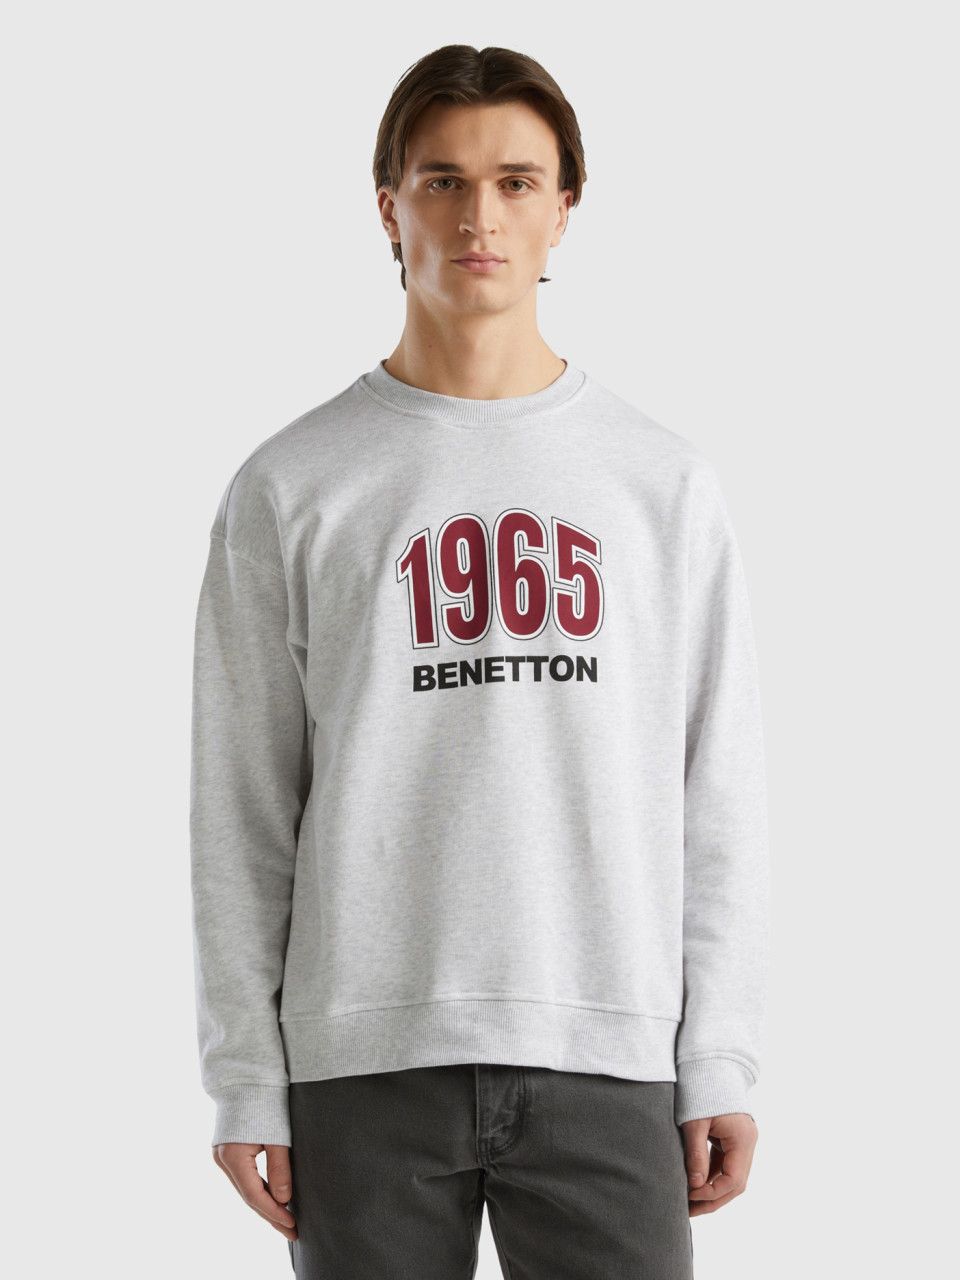 Benetton, Crew Neck Sweatshirt With Logo Print, Light Gray, Men